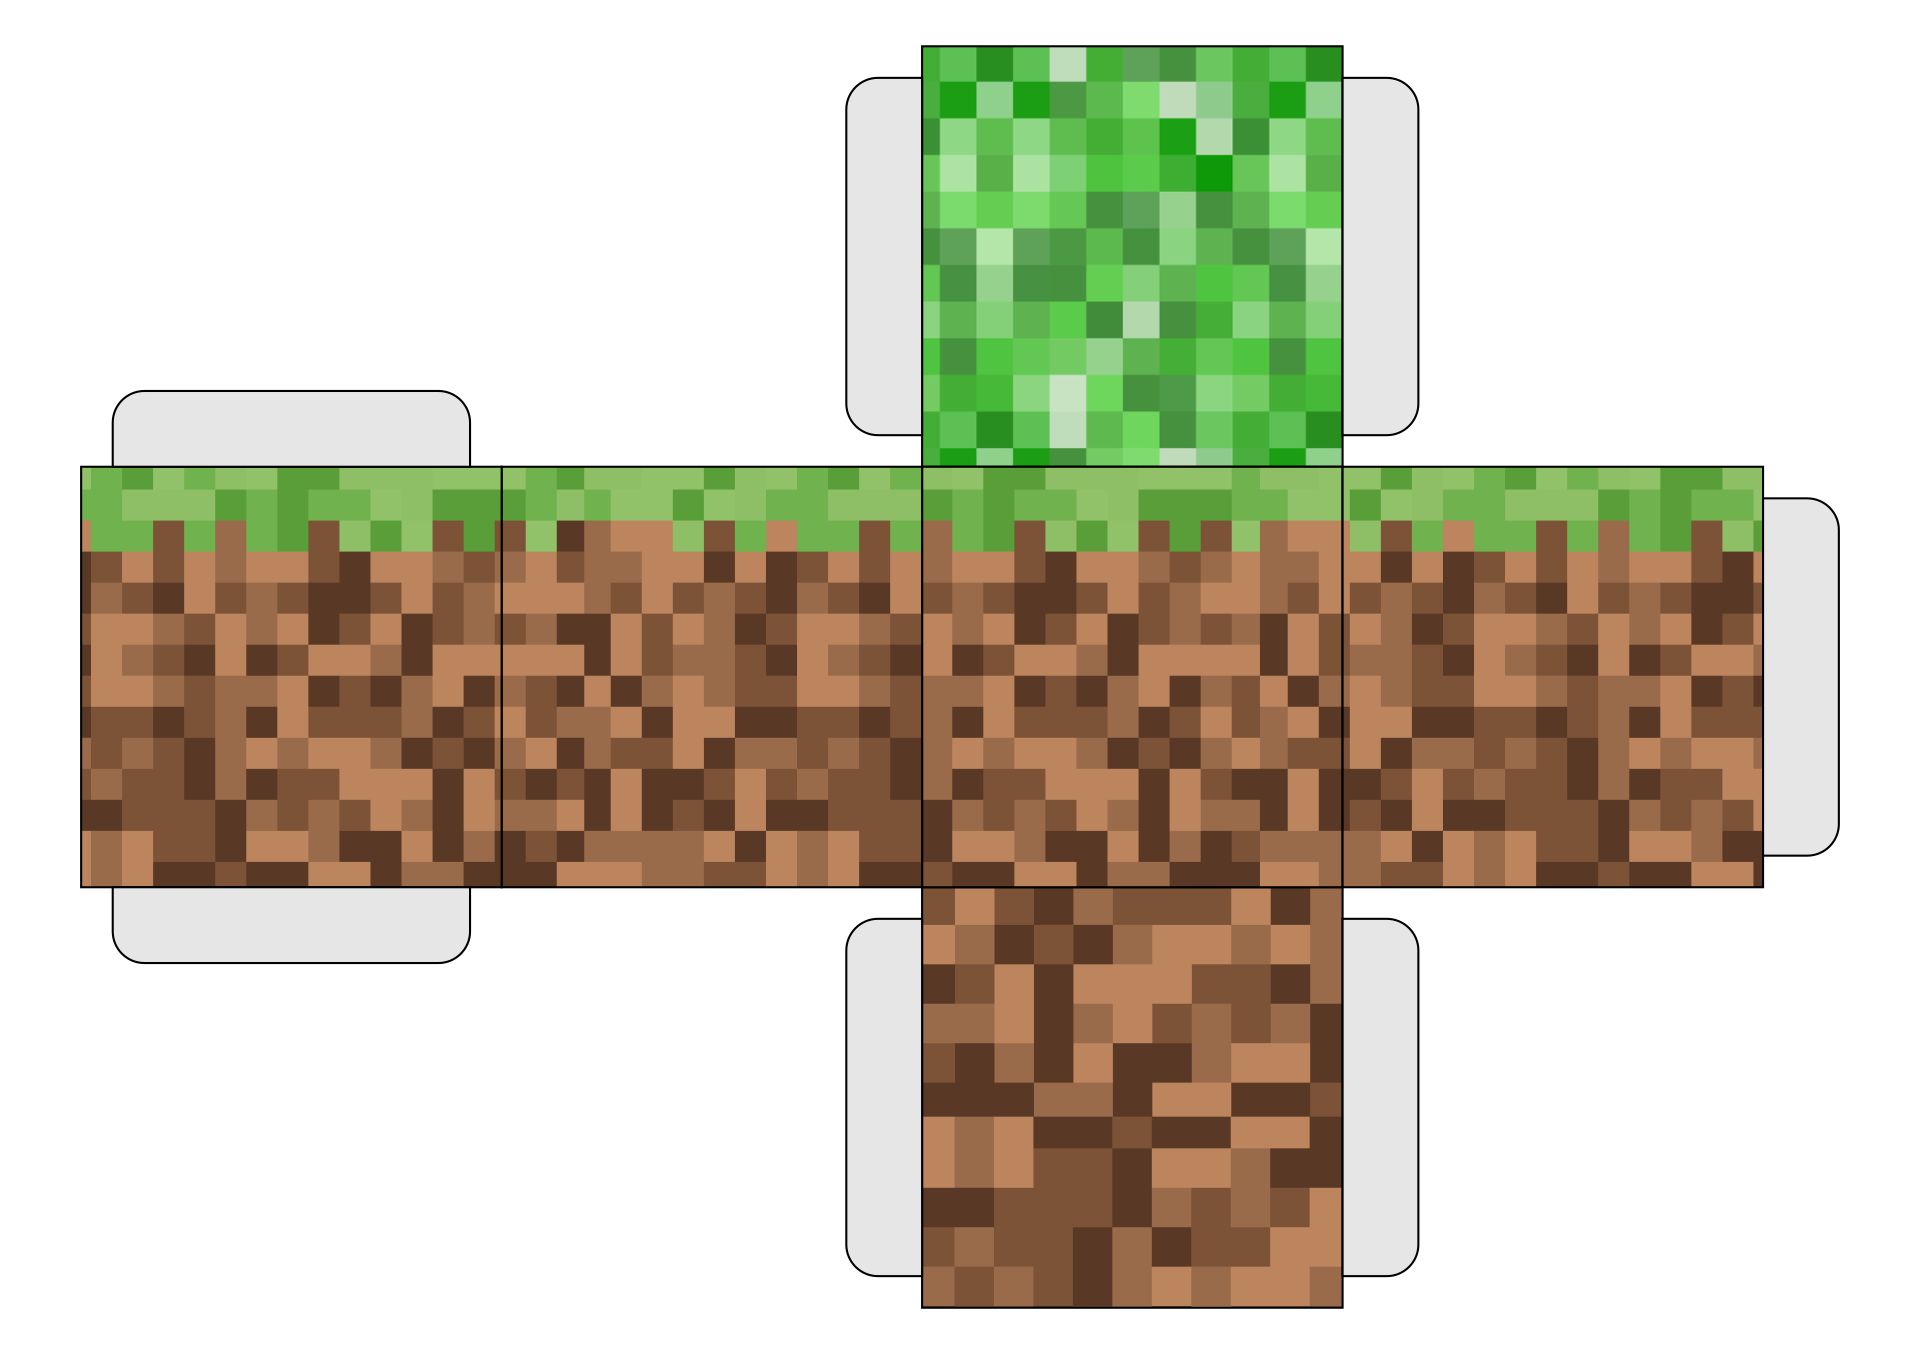 Minecraft Grass Block Printable